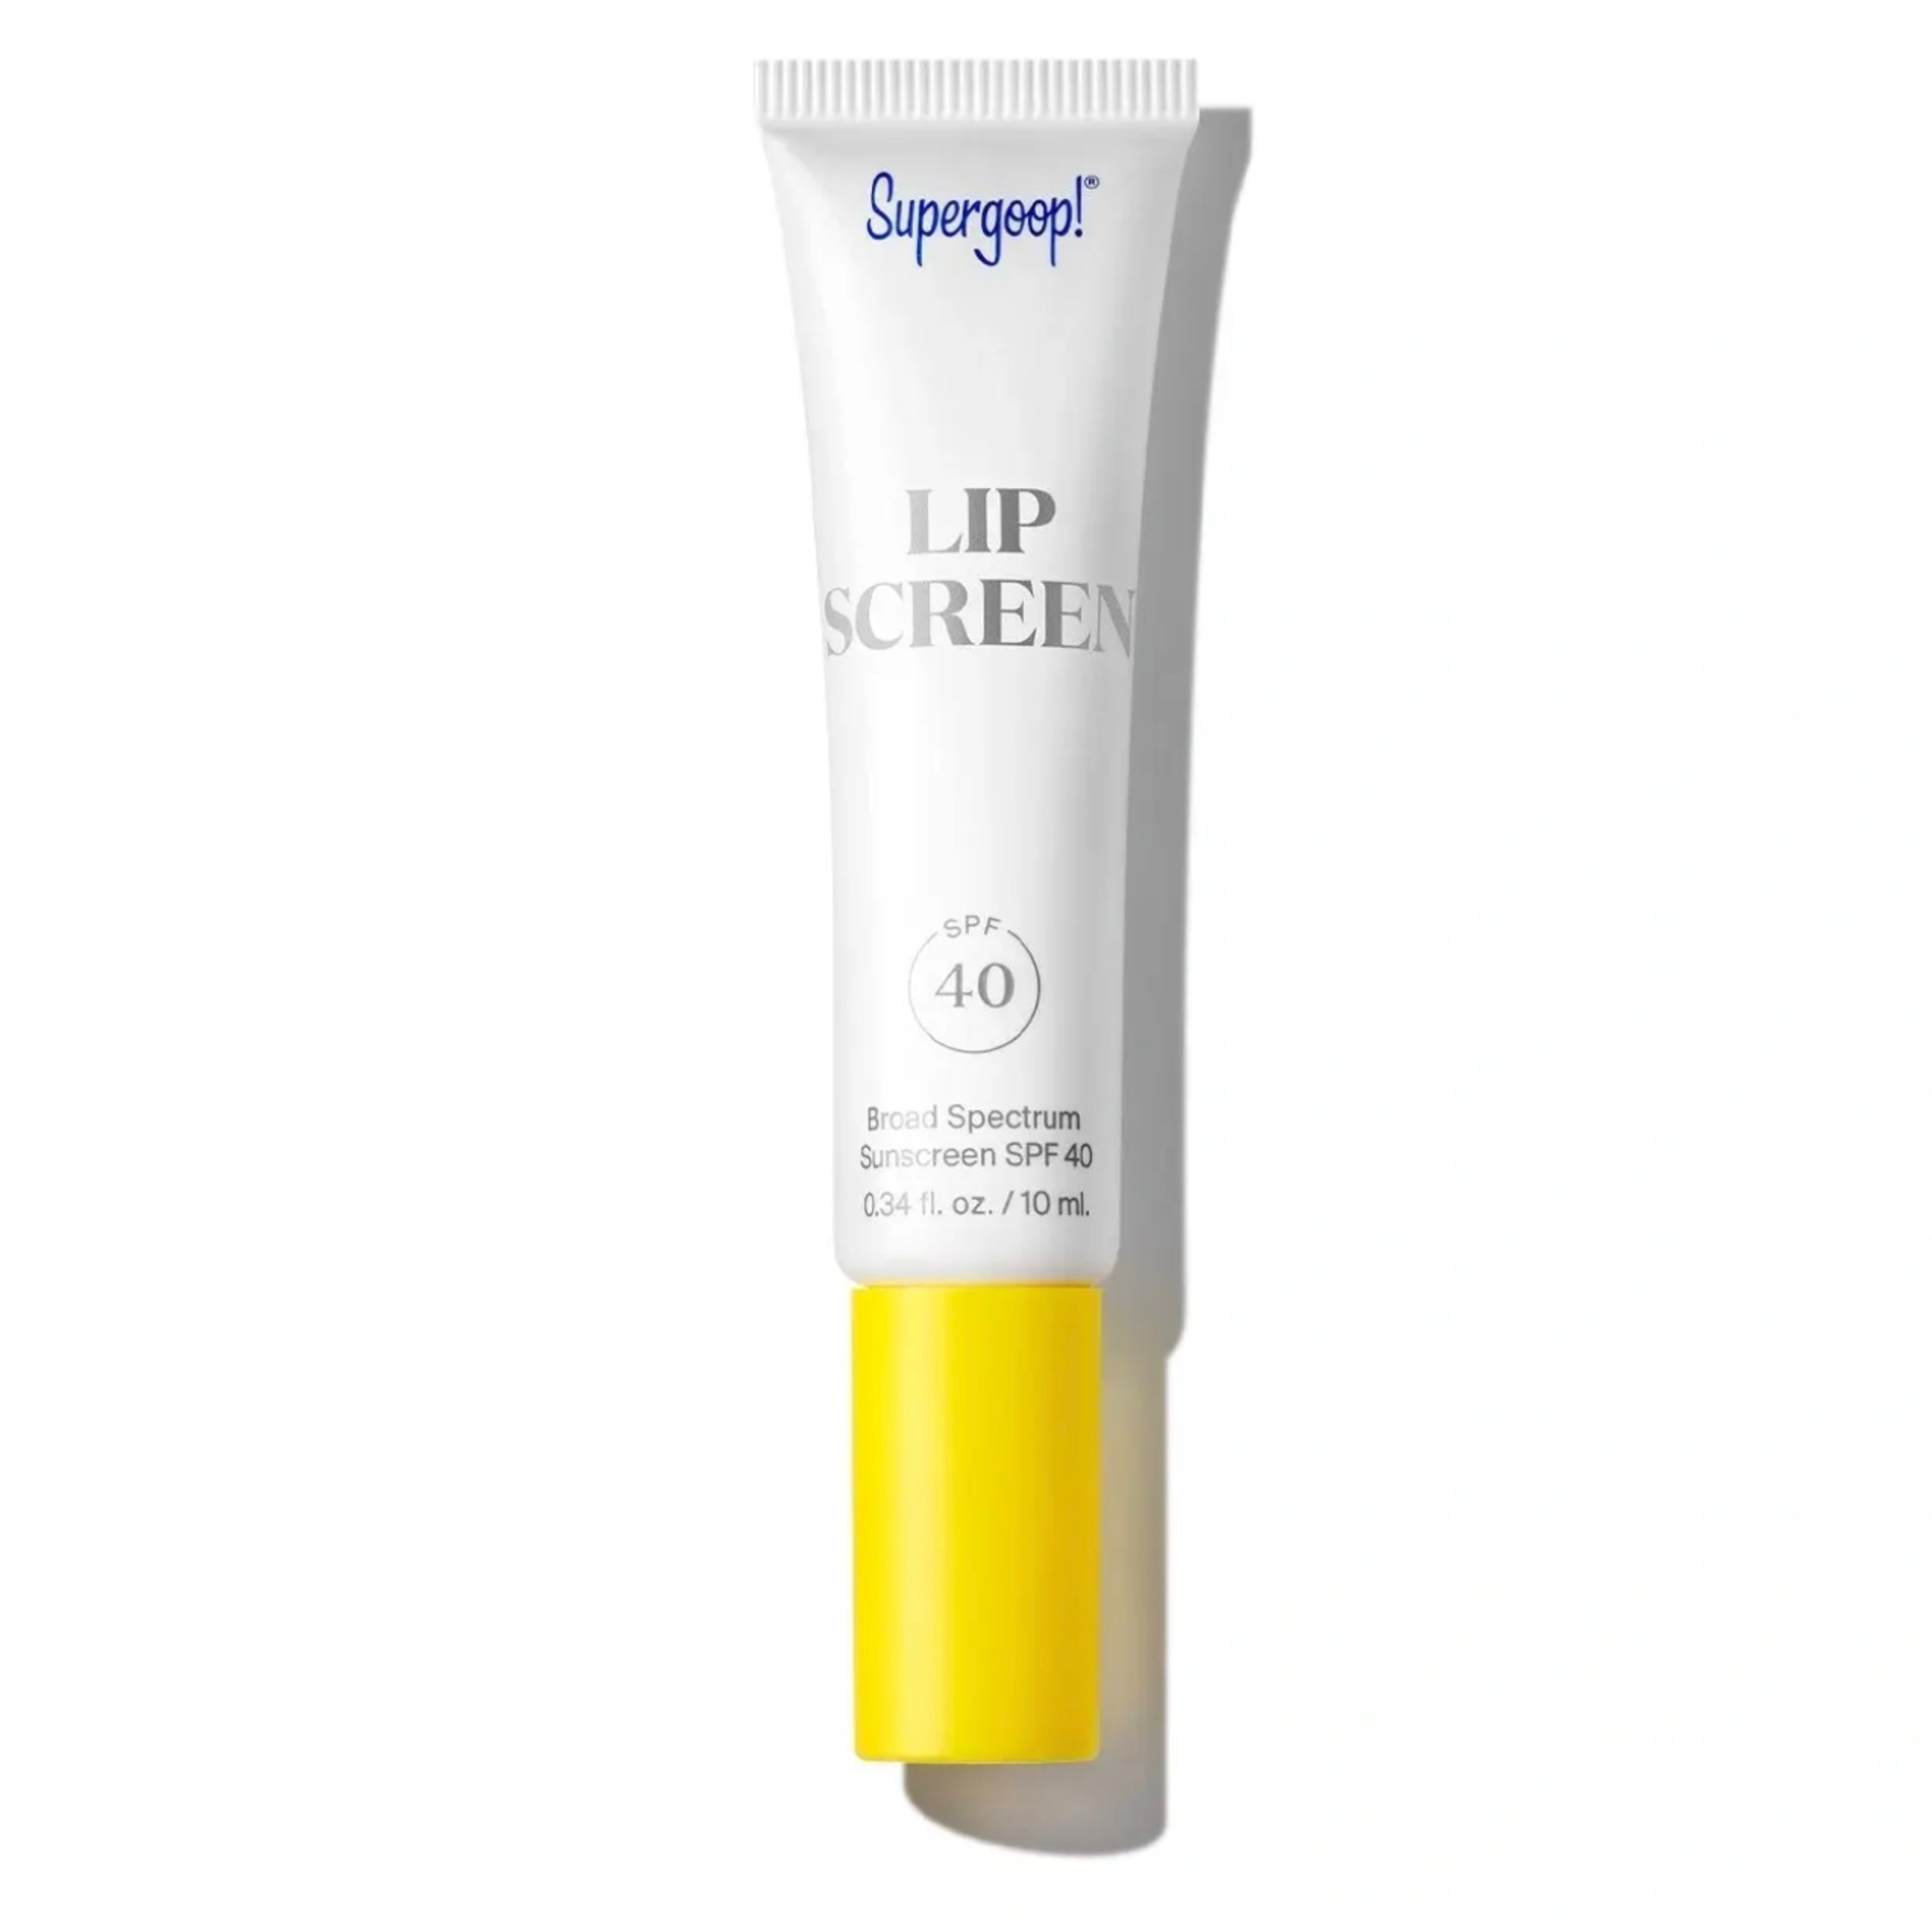 Supergoop! LipScreen Shine SPF 40